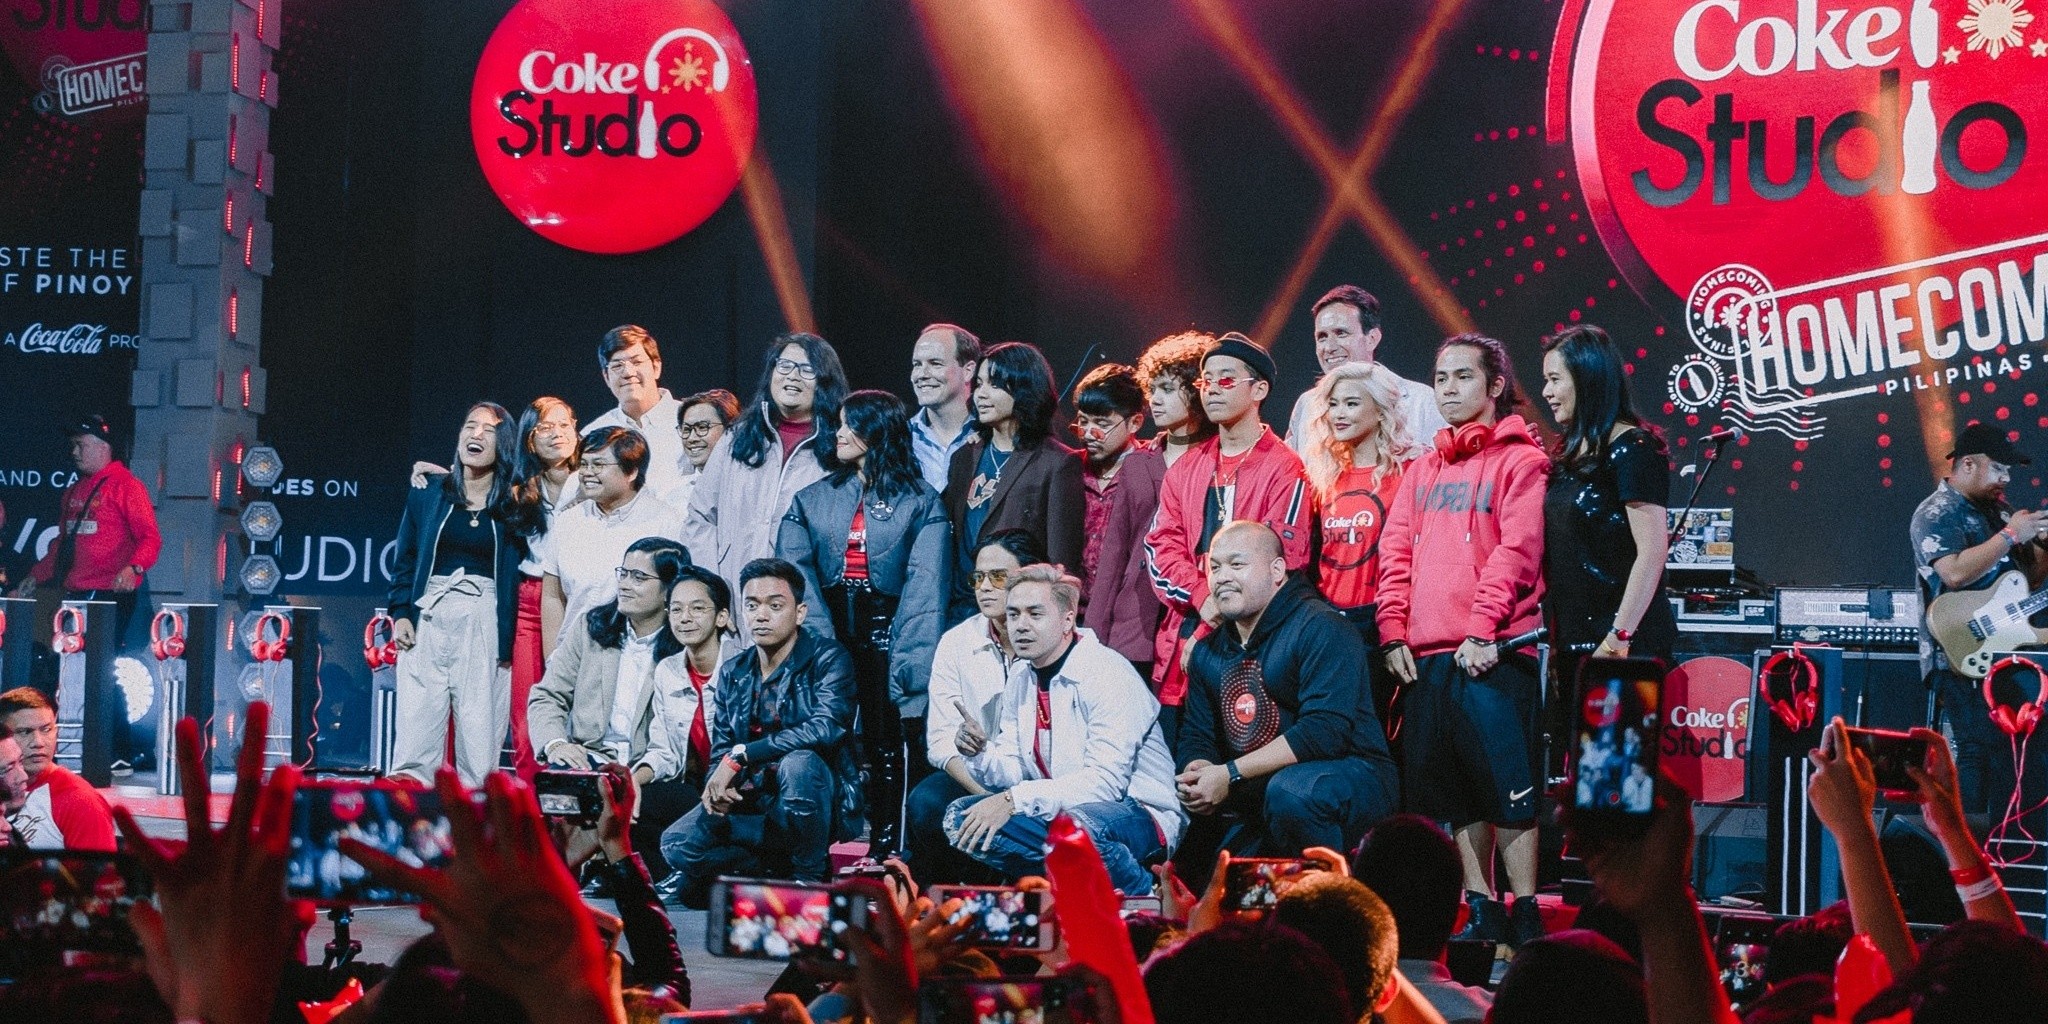 Coke Studio Homecoming lineup revealed: IV of Spades, QUEST, Ben&Ben, Juan Miguel Severo, and more